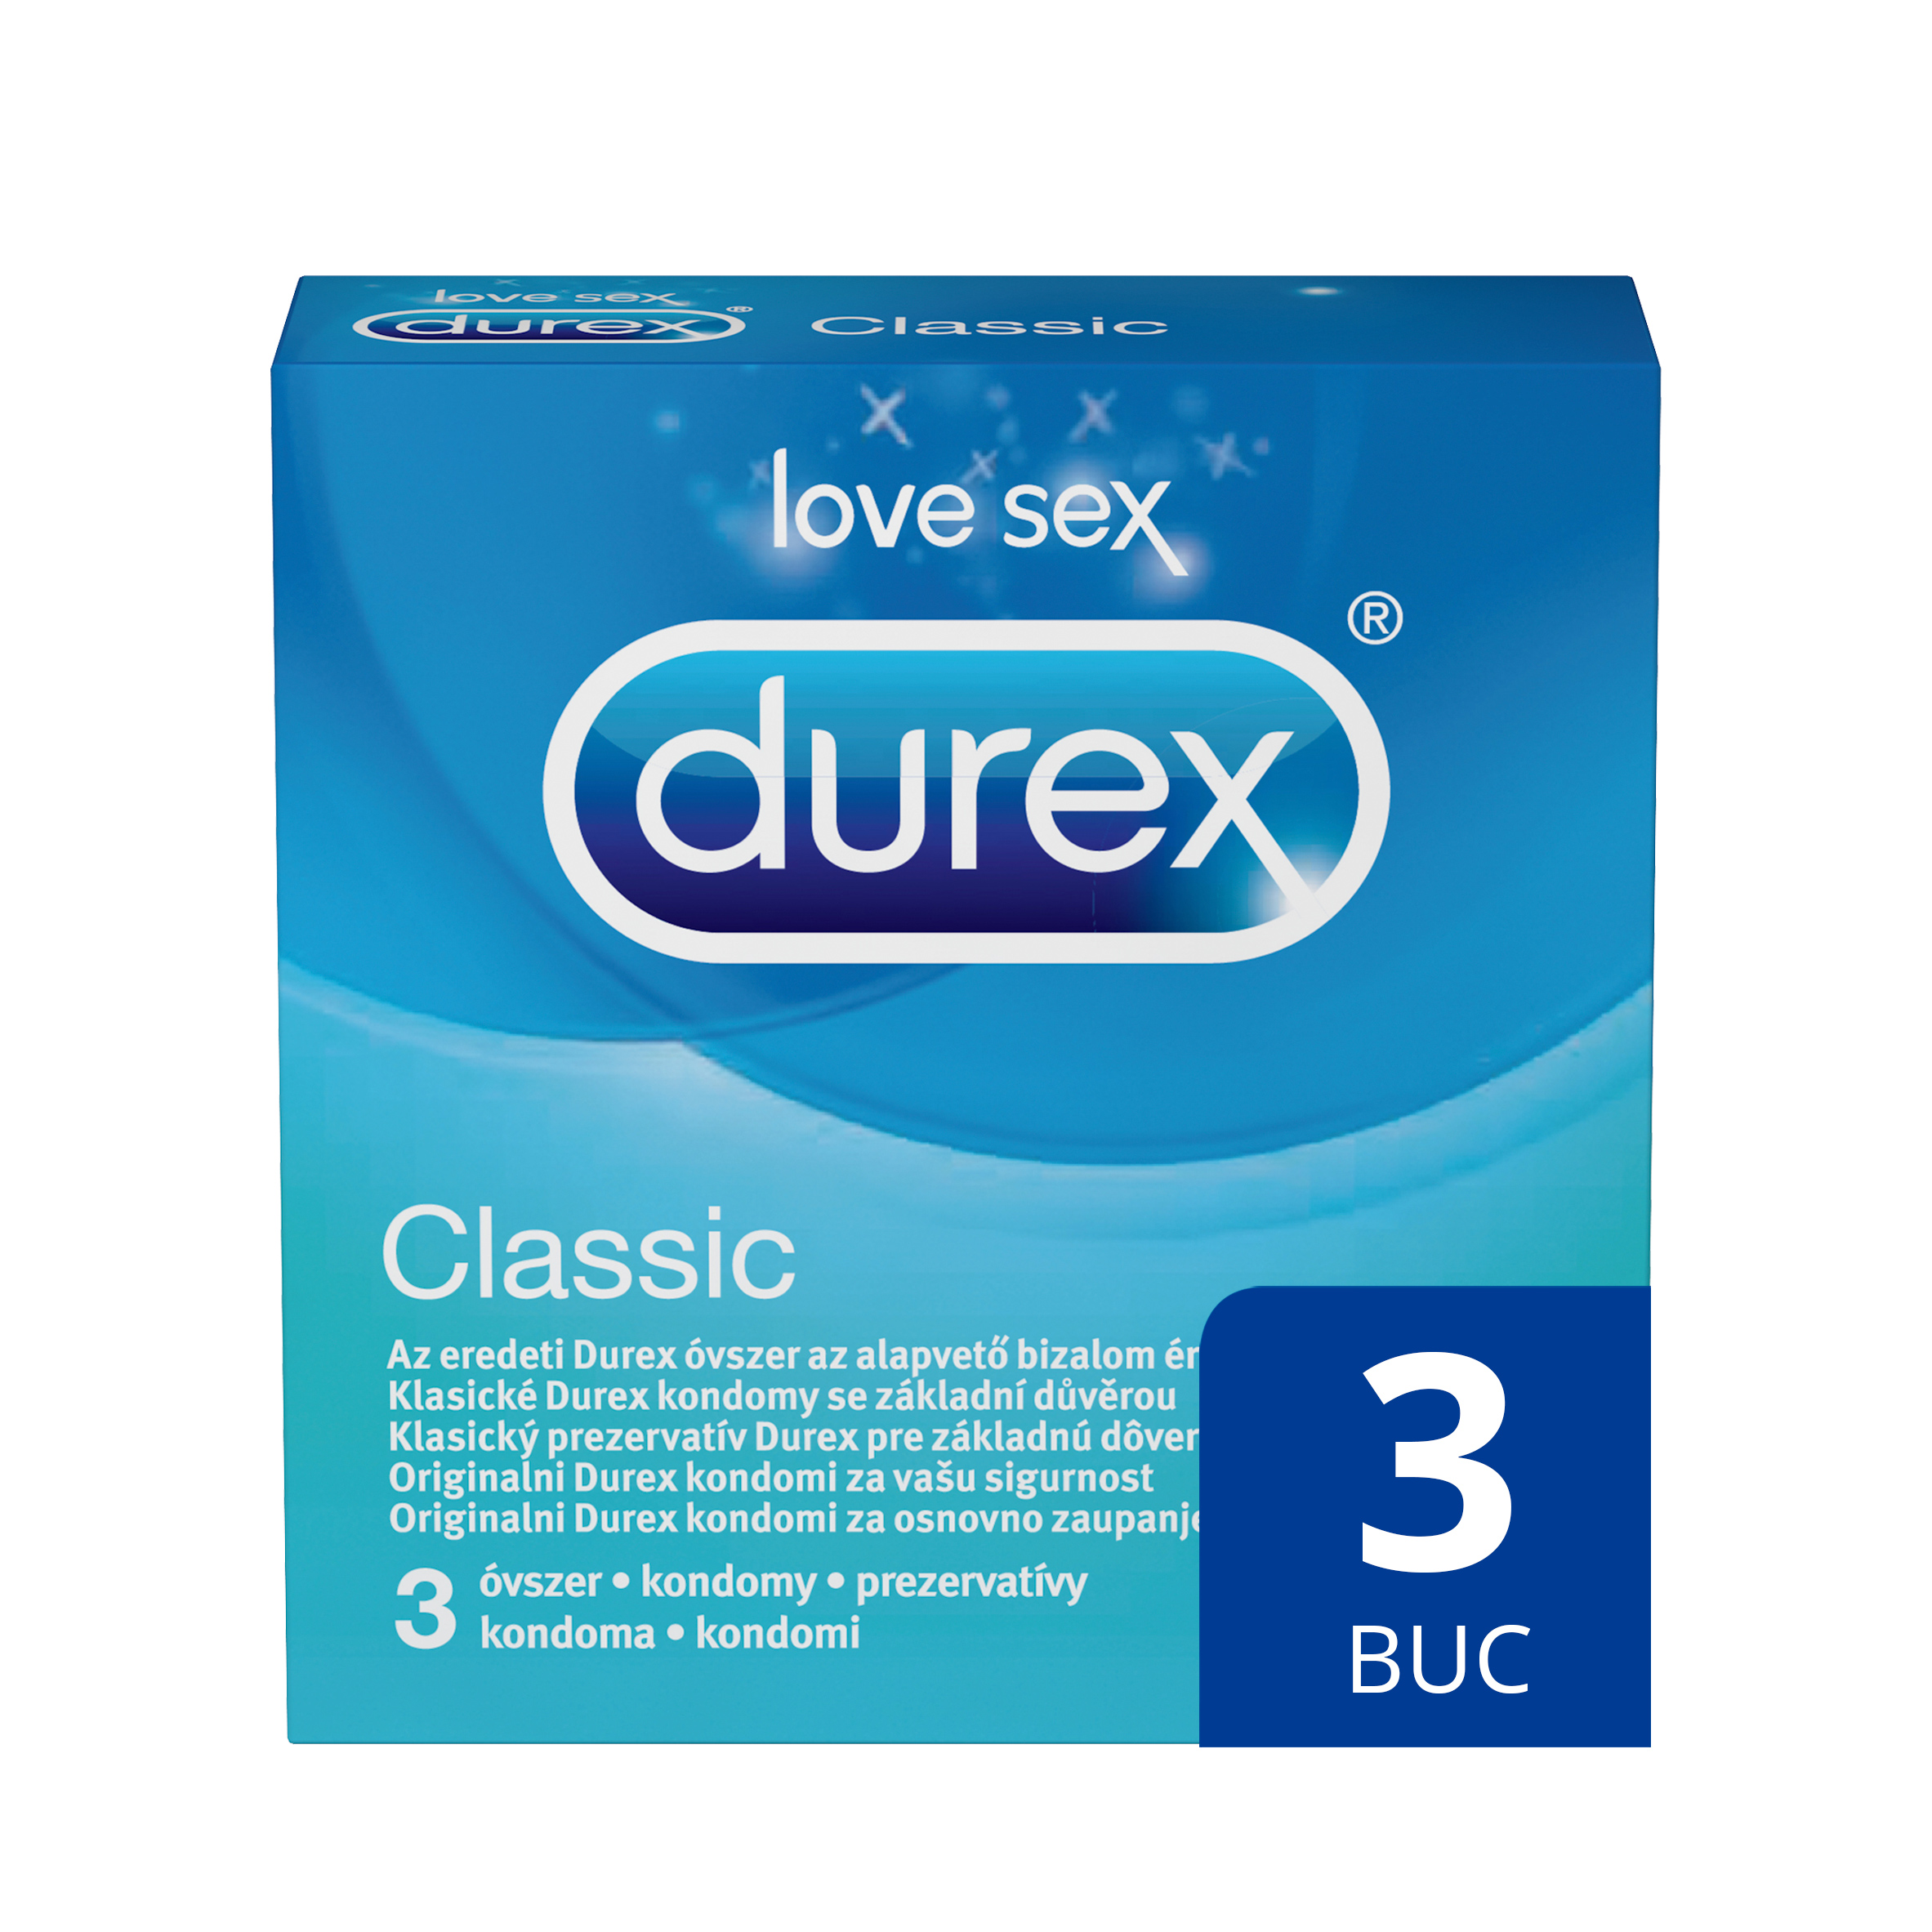 DUREX CLASSIC PREZERVATIV 3BUC DUREX